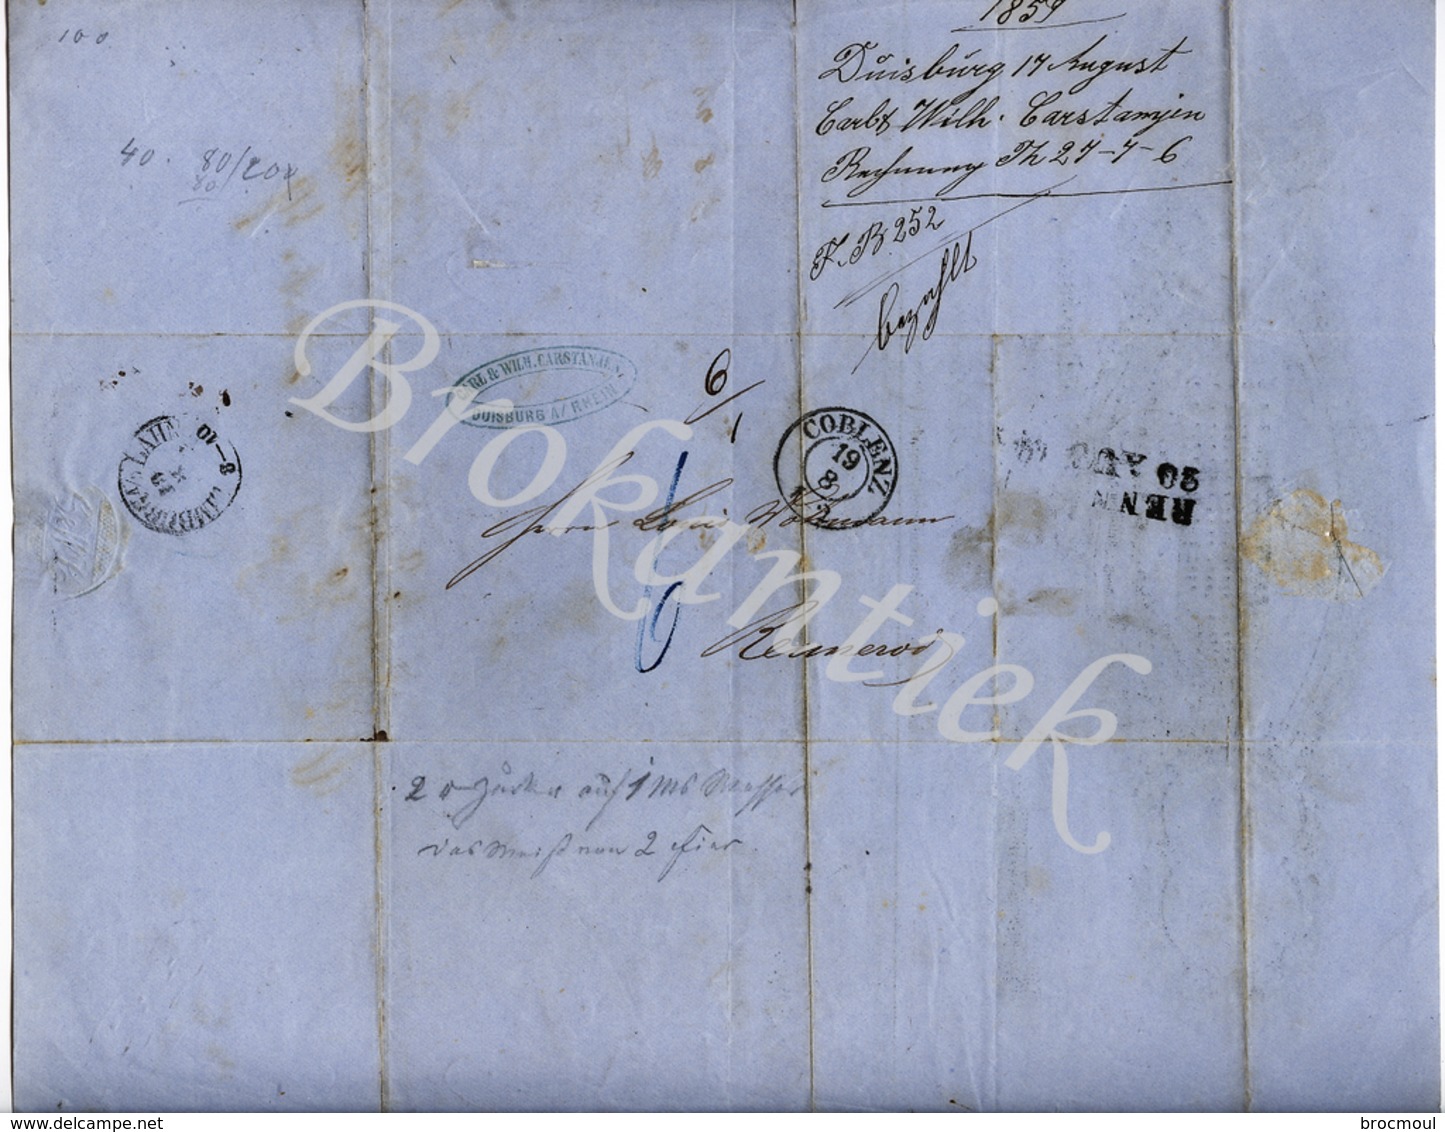 CARL & WILHELM CASTANJEN  Tabakfabriek  DUISBURG  Rechnung / Invoice, Send By Post From KOBLENZ 17 August 1859 - 1800 – 1899